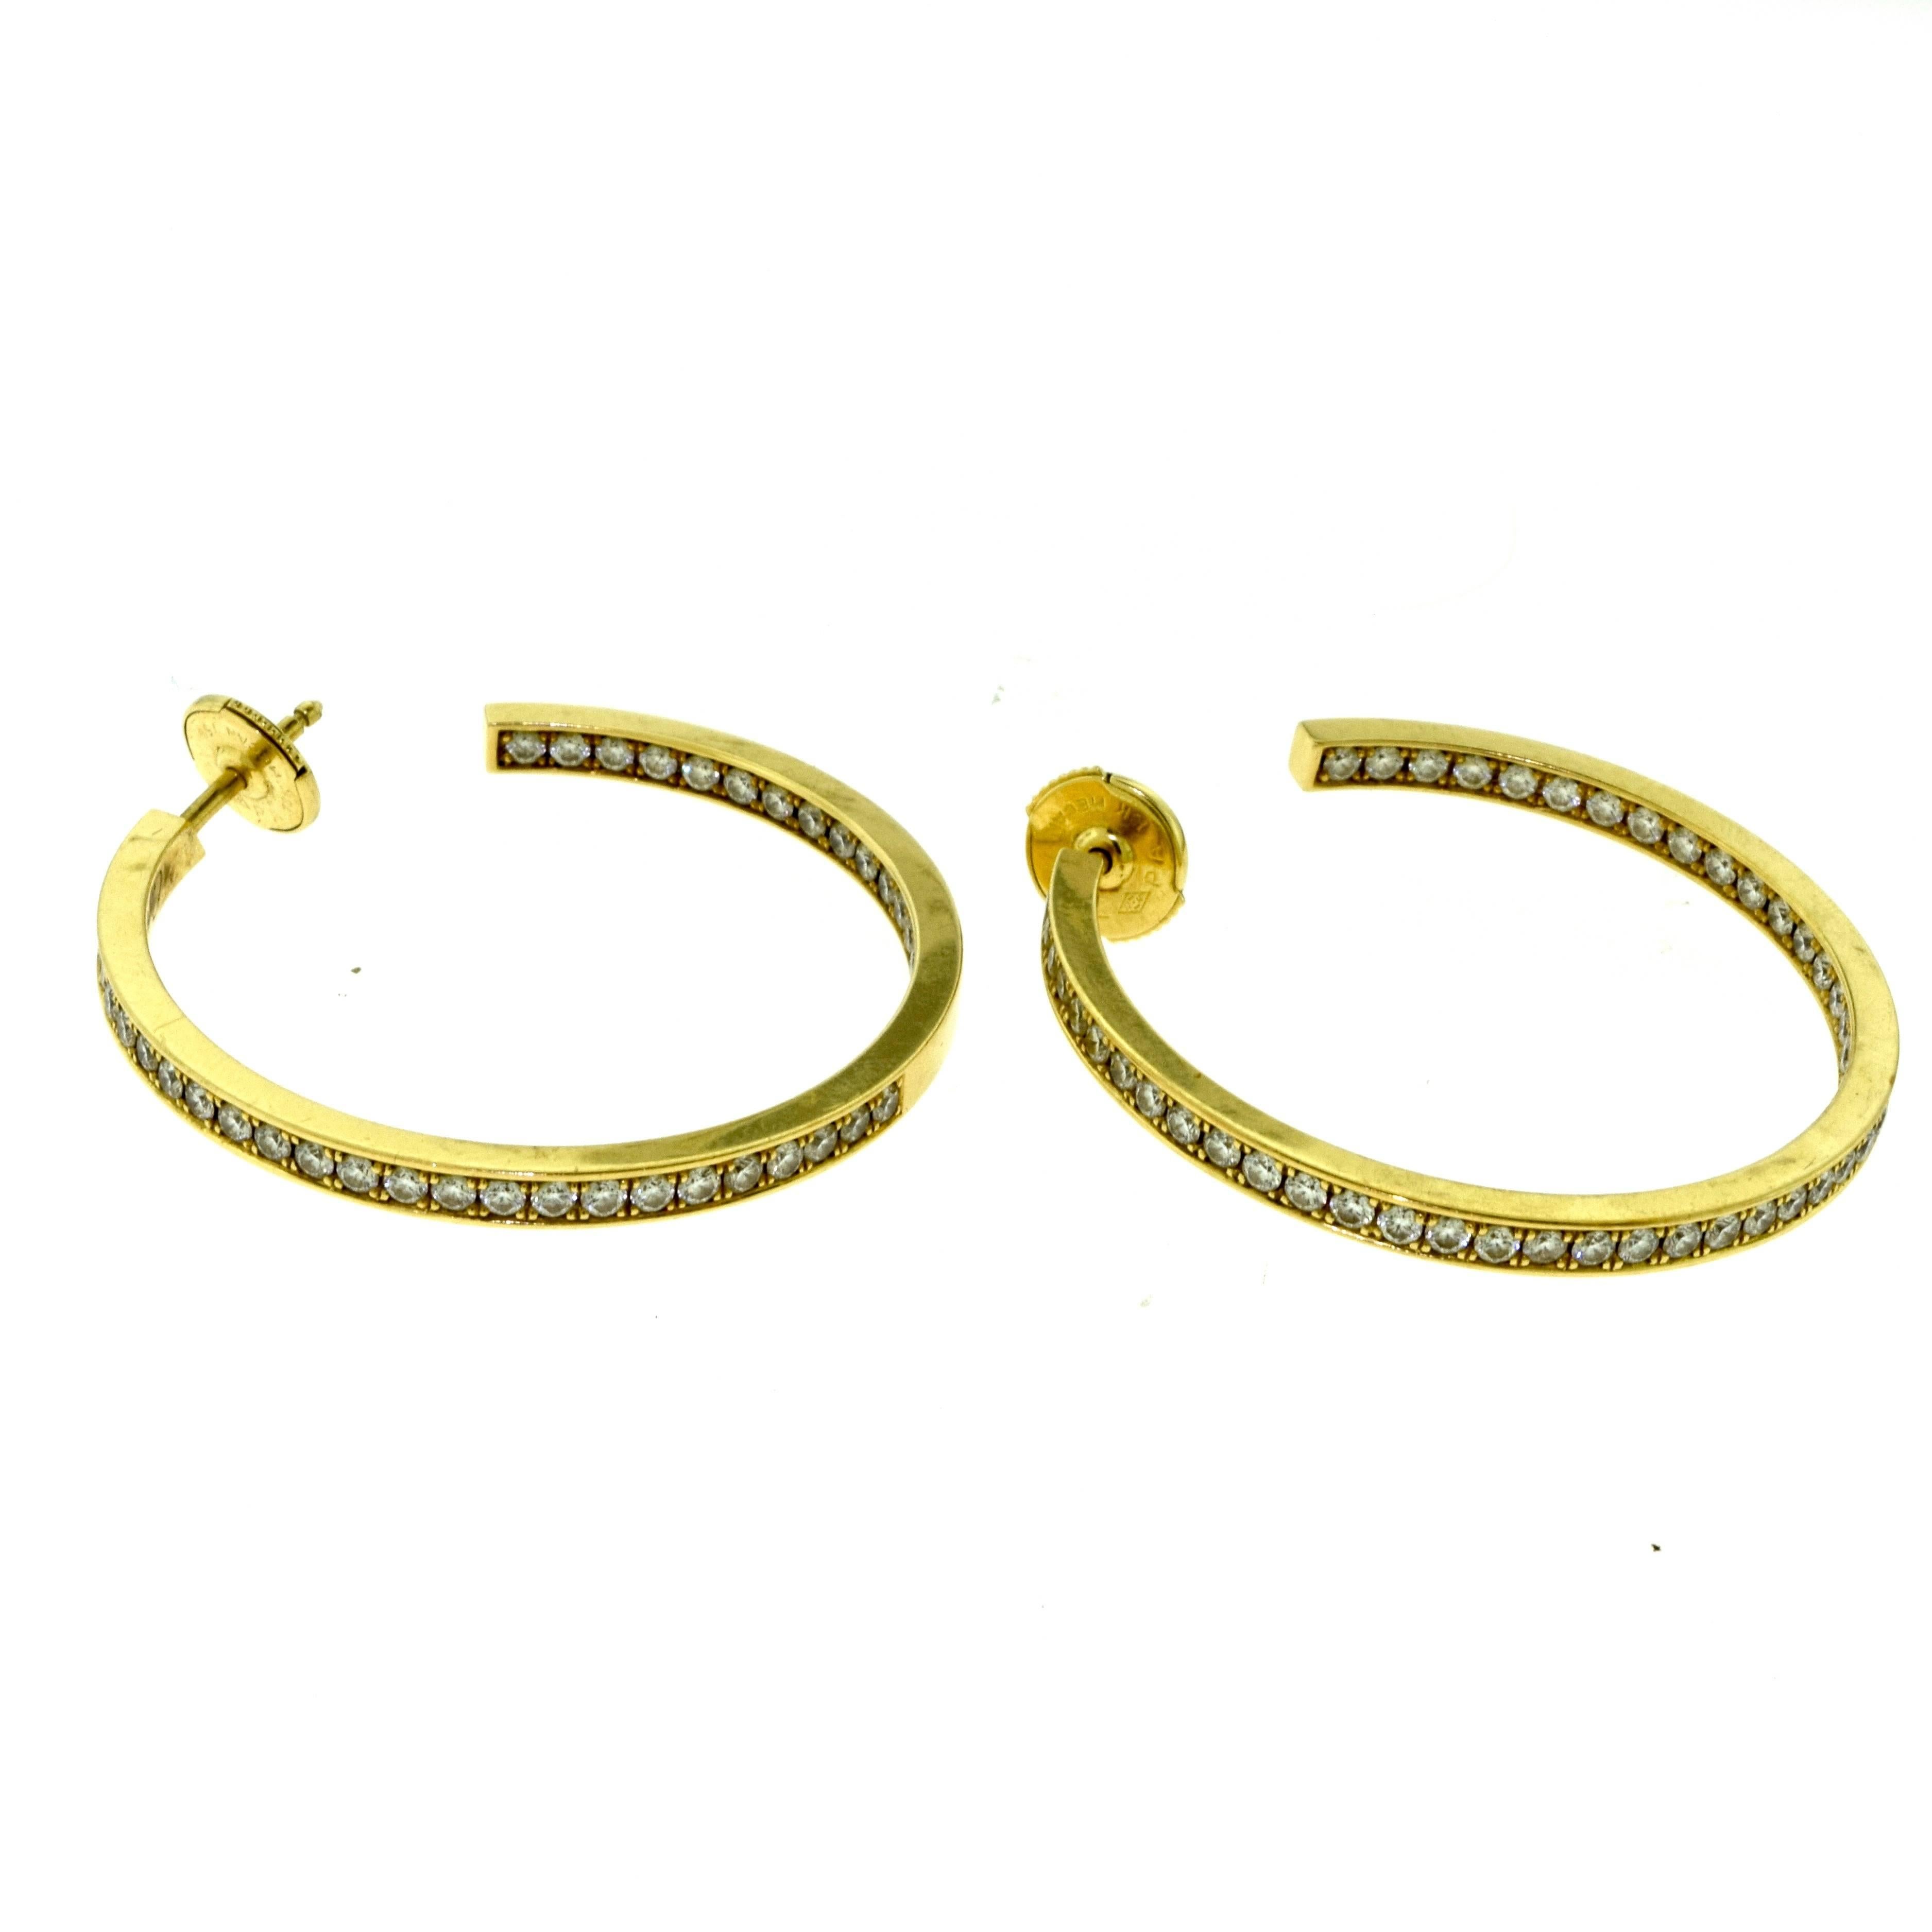 Type: Hoop Earrings
Designer: Cartier
Metal: Yellow Gold
Metal Purity: 18k
Stones: Round Brilliant Diamonds
Total Carat Weight: 1.80 carat
Total Item Weight (g): 11.9
Earring Width: 2.69 mm
Earring Diameter: approx. 1.4 inches
Hallmarks: Cartier 750